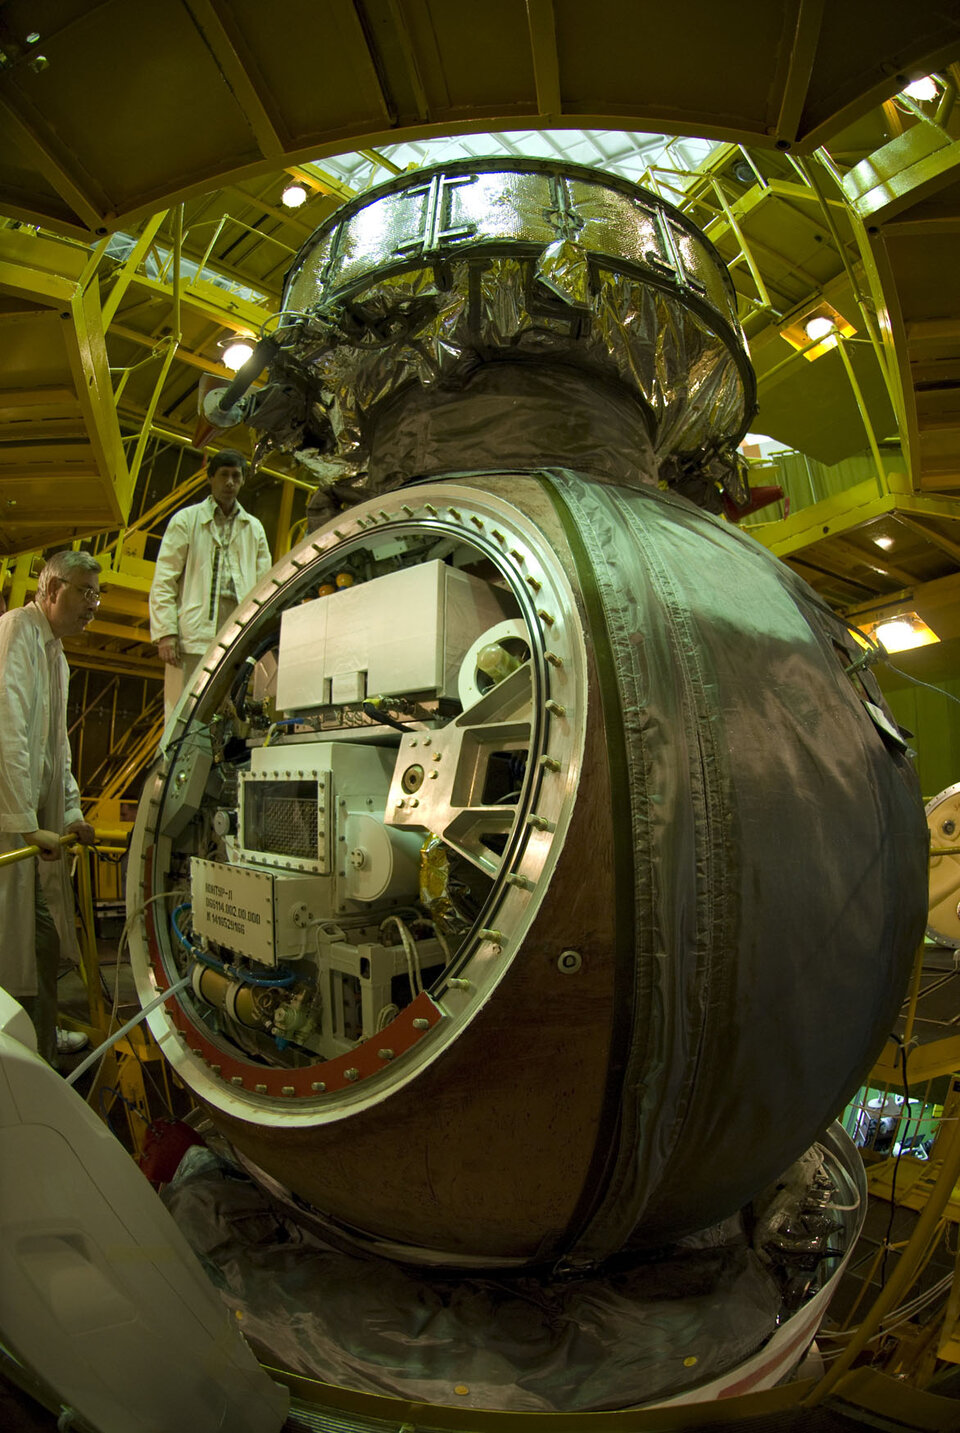 The Foton-M3 capsule spent 12 days orbiting the Earth in September 2007